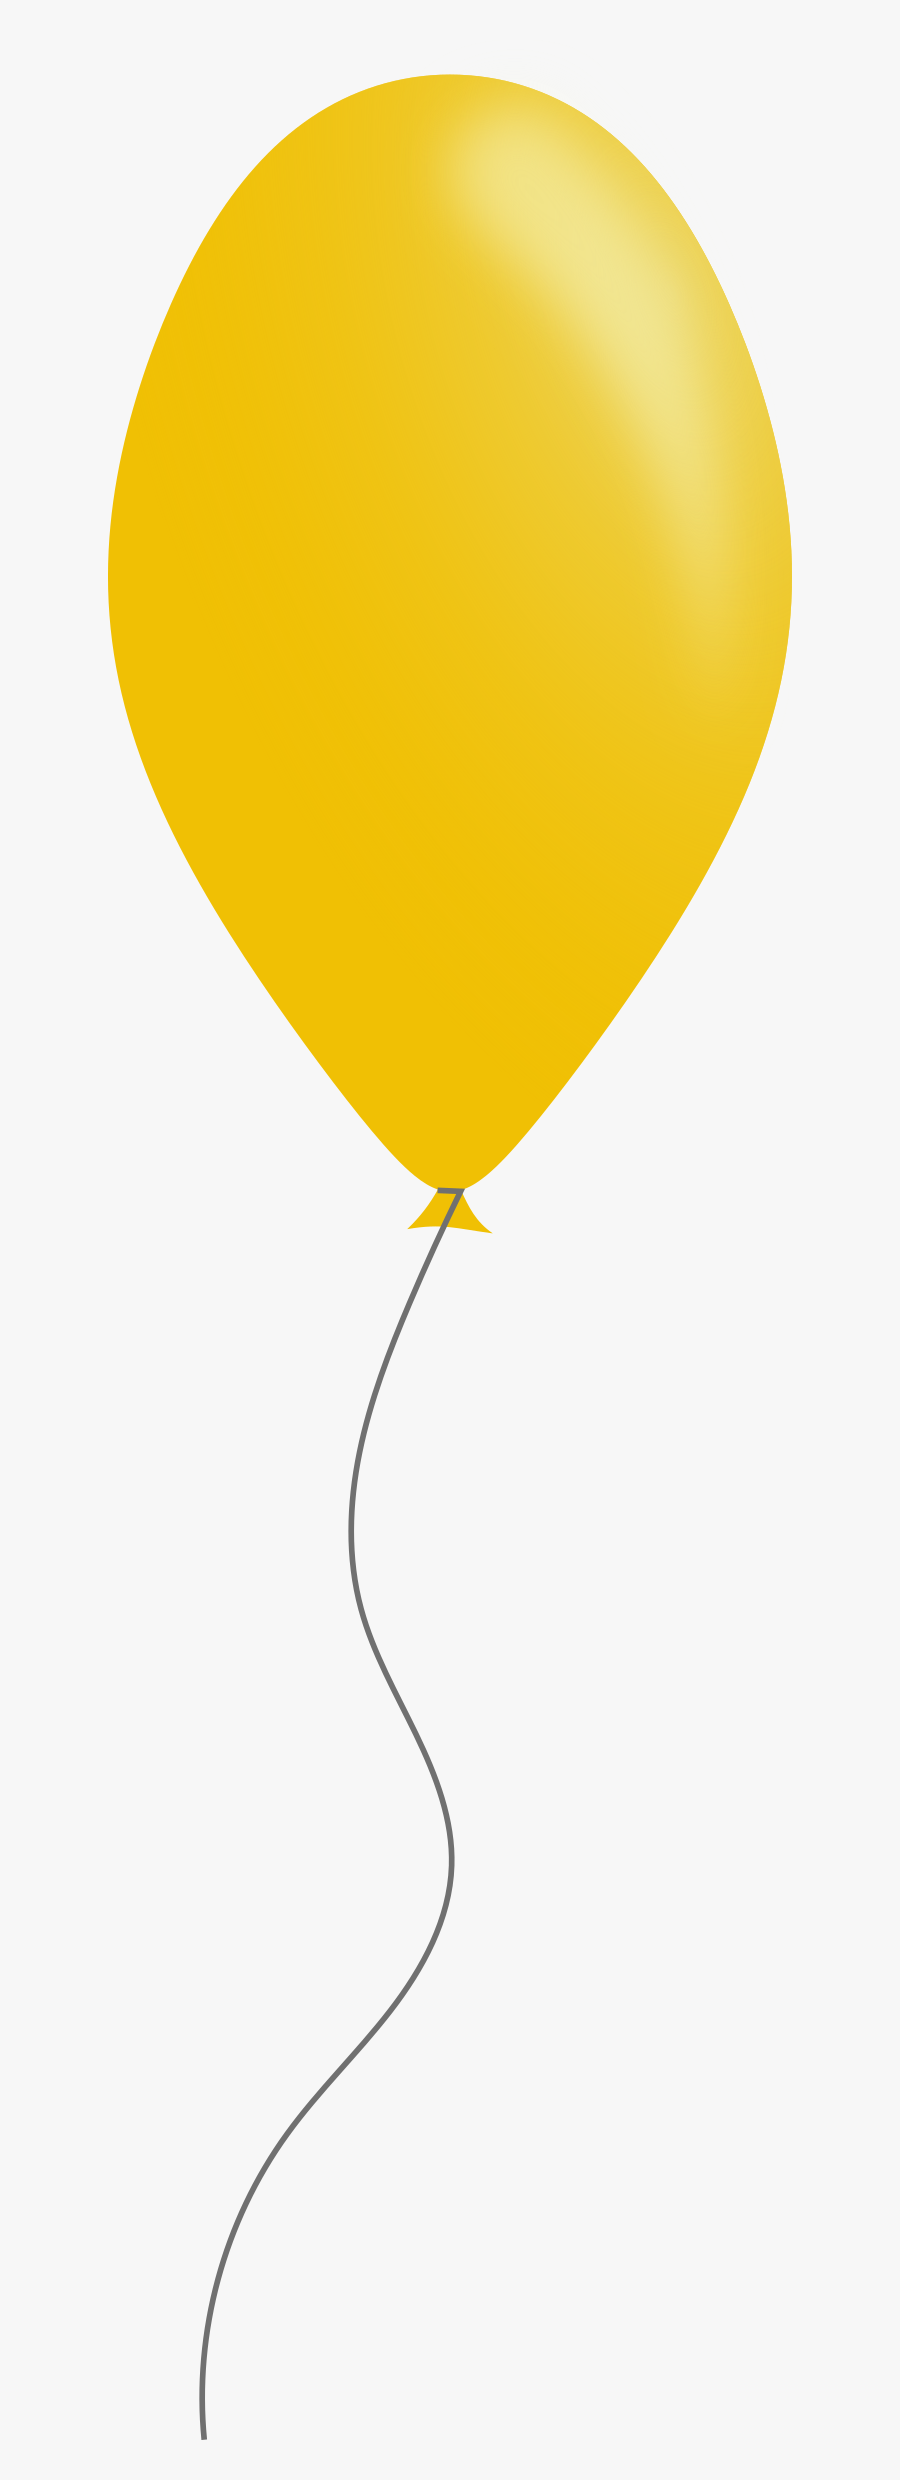 Clipart - Transparent Yellow Balloons Png, Transparent Clipart